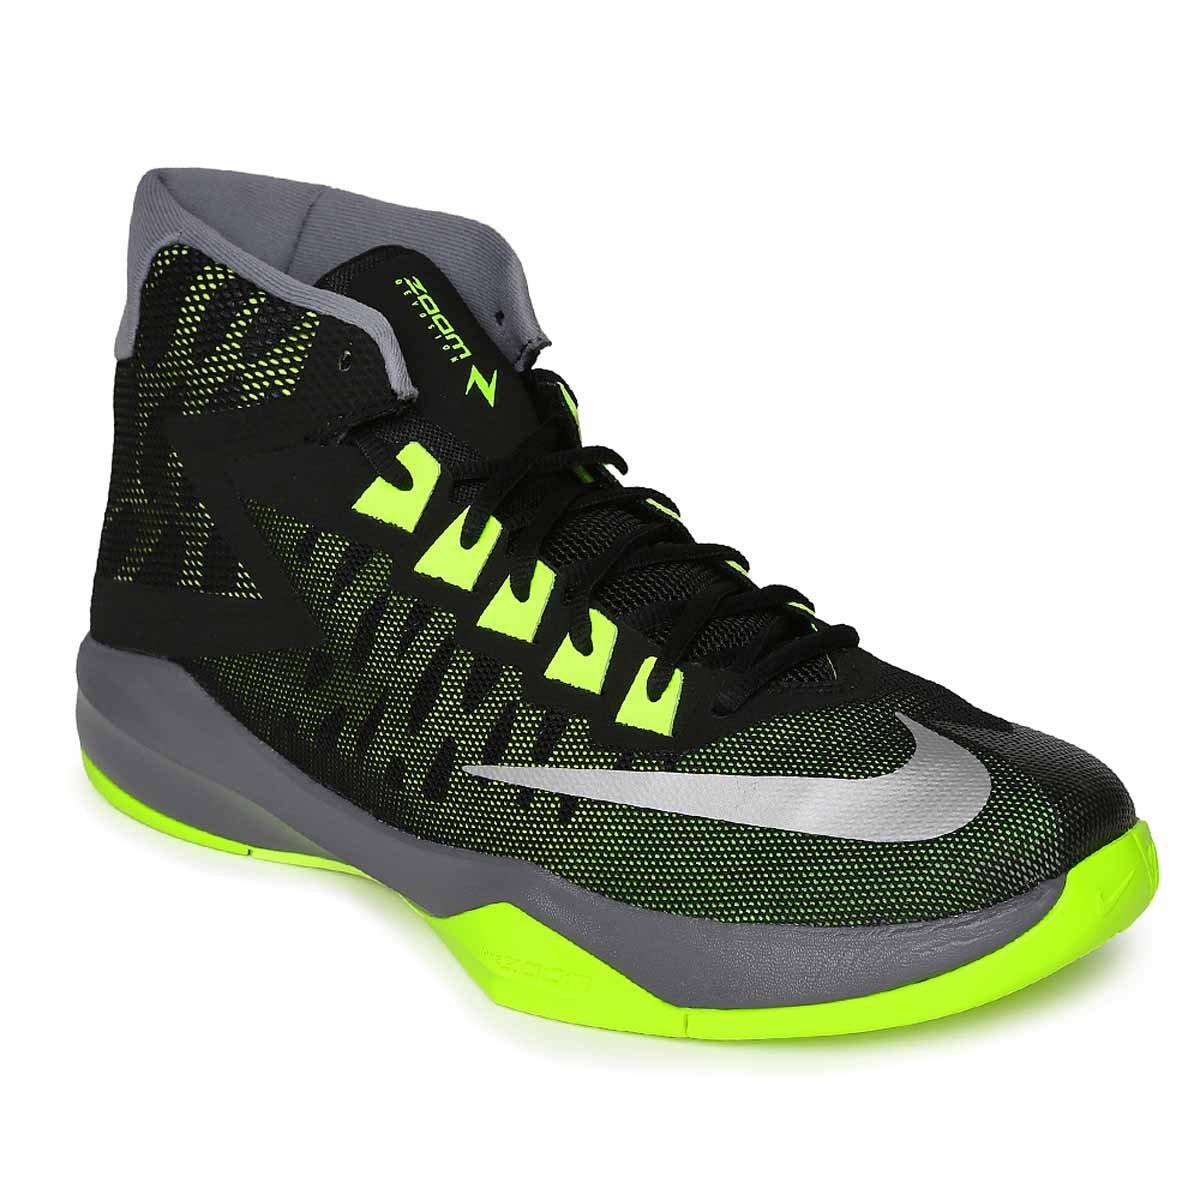 Buy Nike Zoom Devosion Basketball Shoes (Black/Silver/Volt